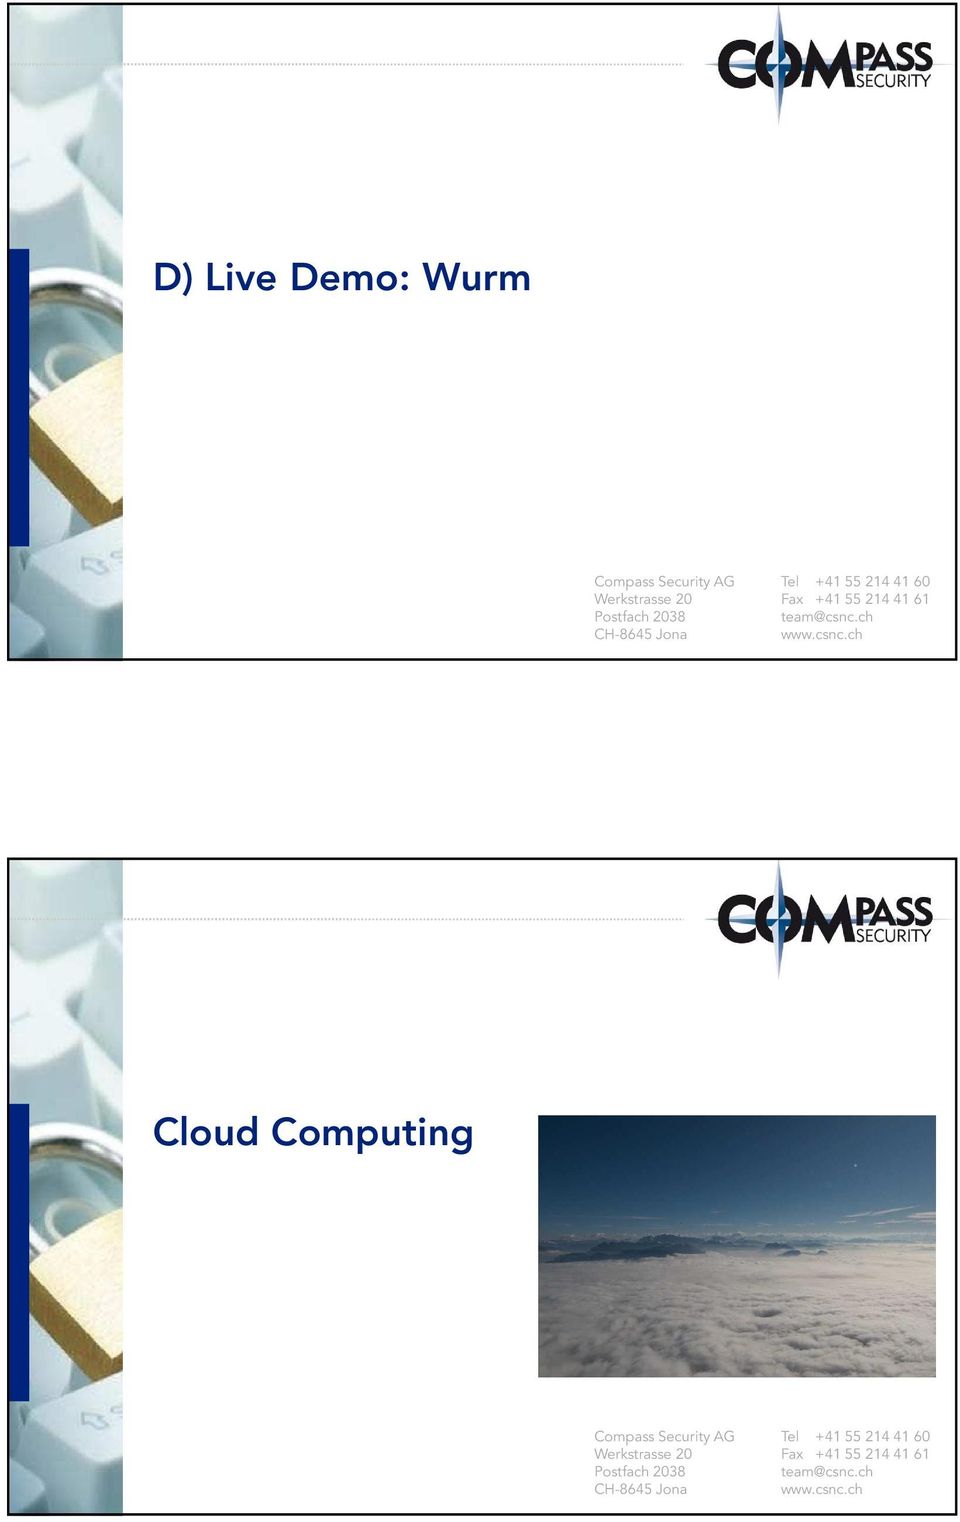 csnc.ch Cloud Computing Compass Security AG Werkstrasse 20 Postfach 2038